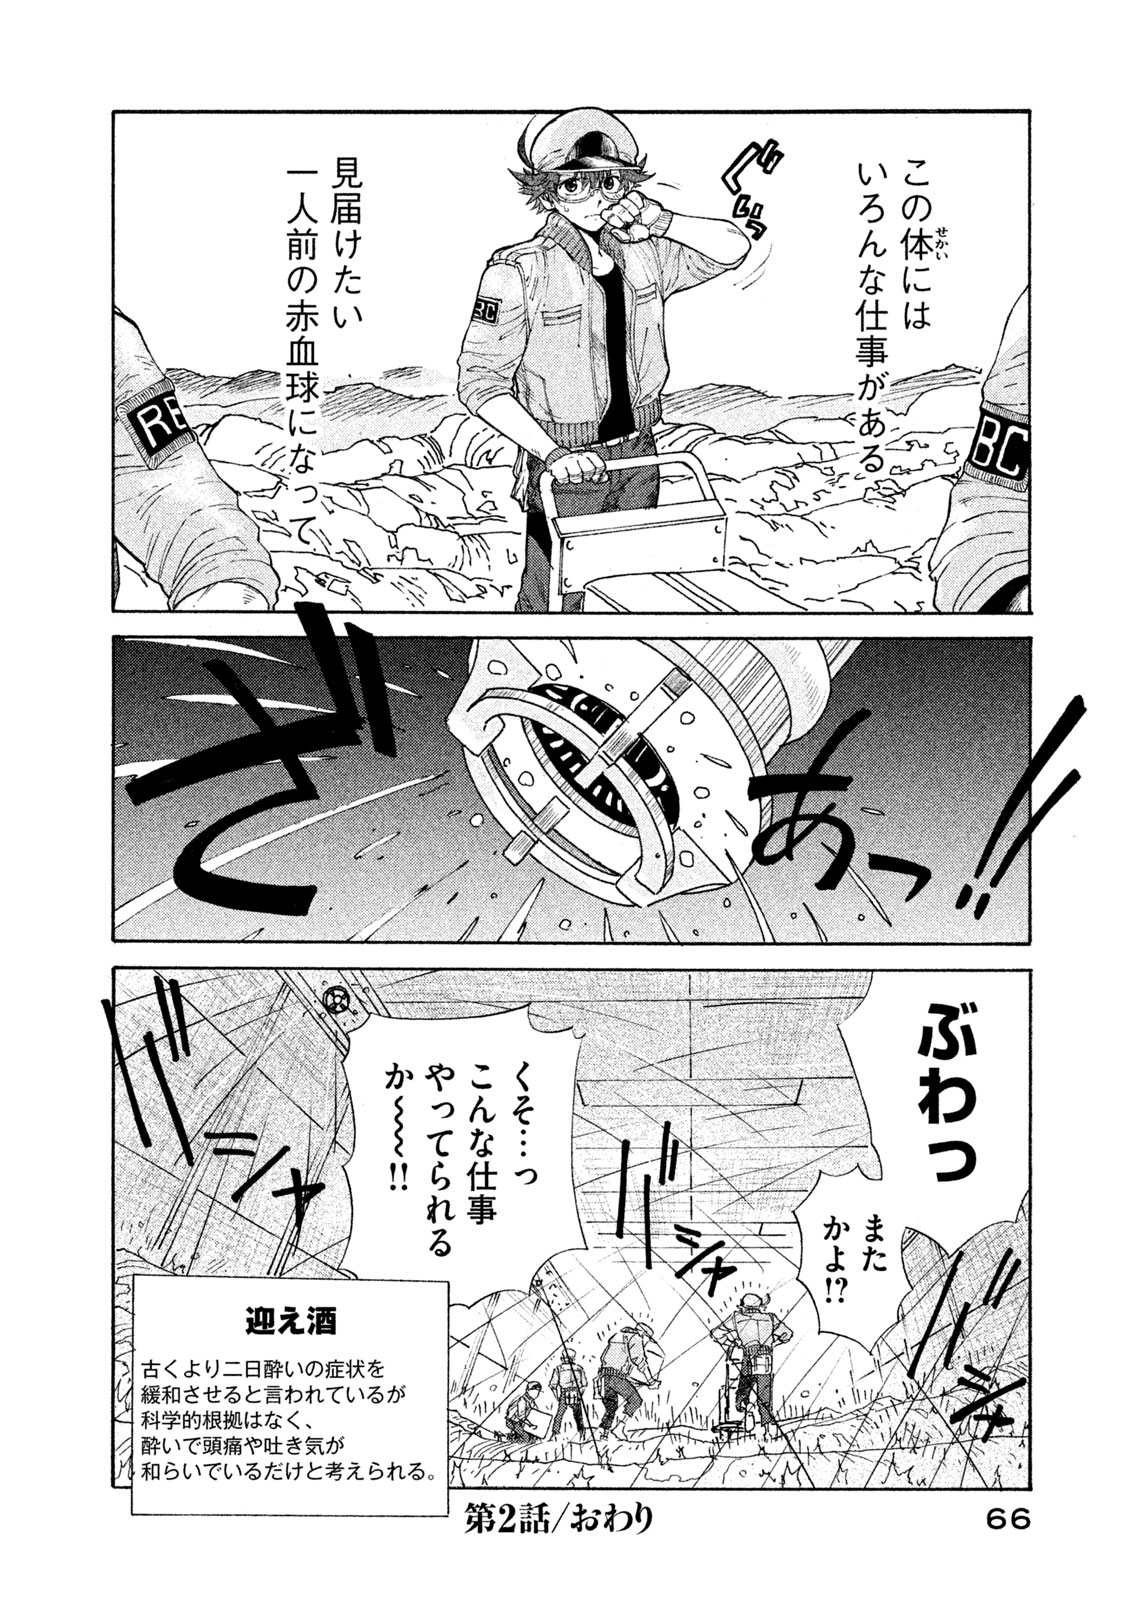 Hataraku Saibou BLACK - Chapter 2 - Page 30